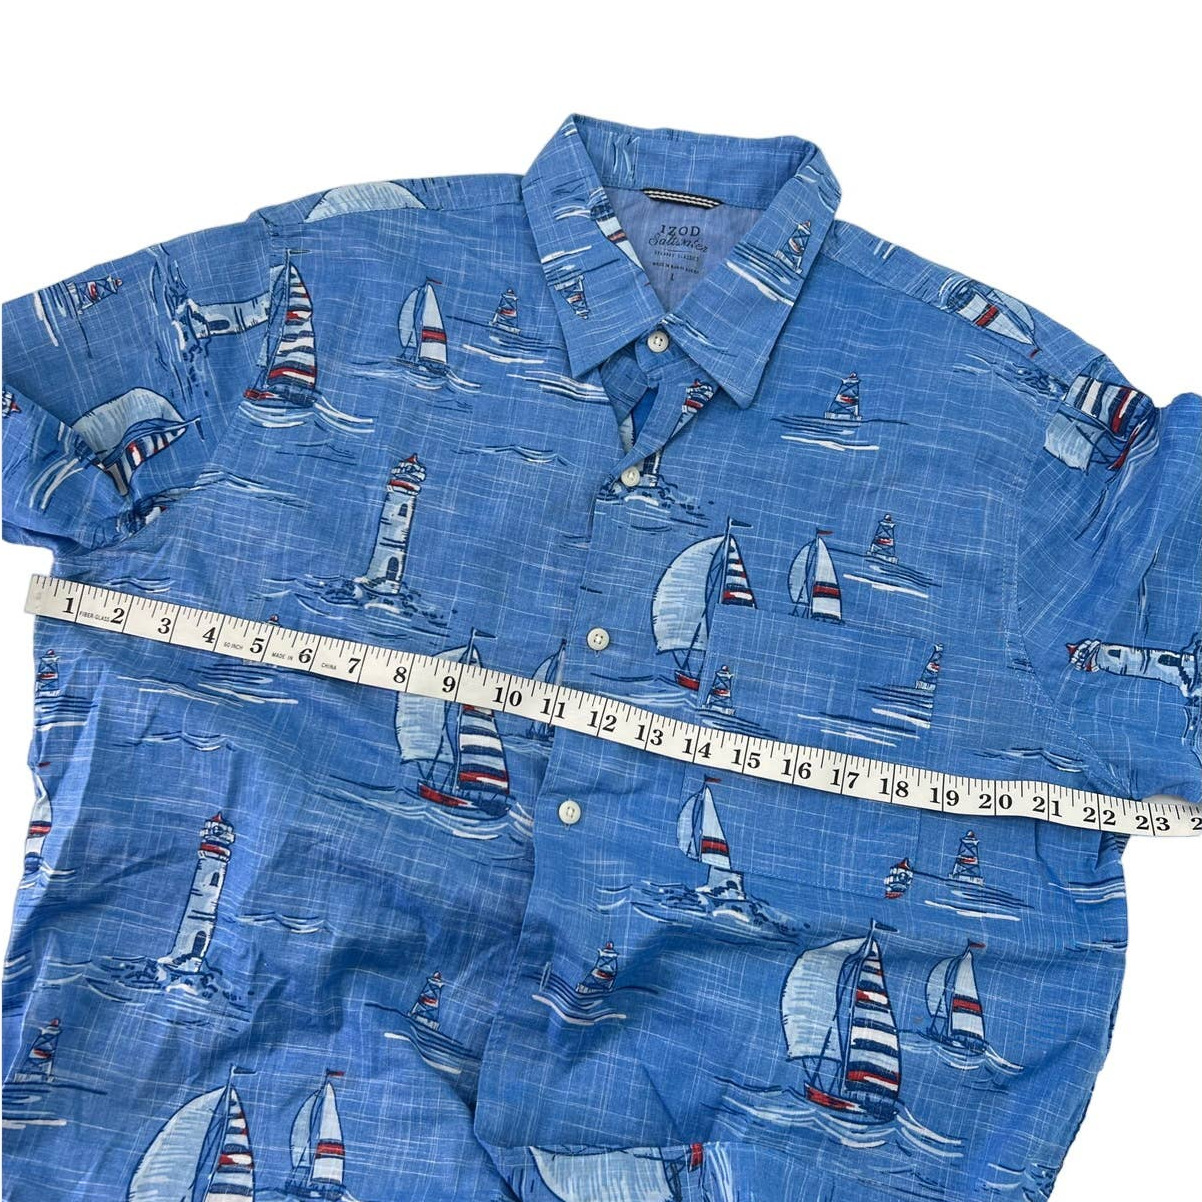 Izod Saltwater Blue Sailboat Shirt Size Large - image 6